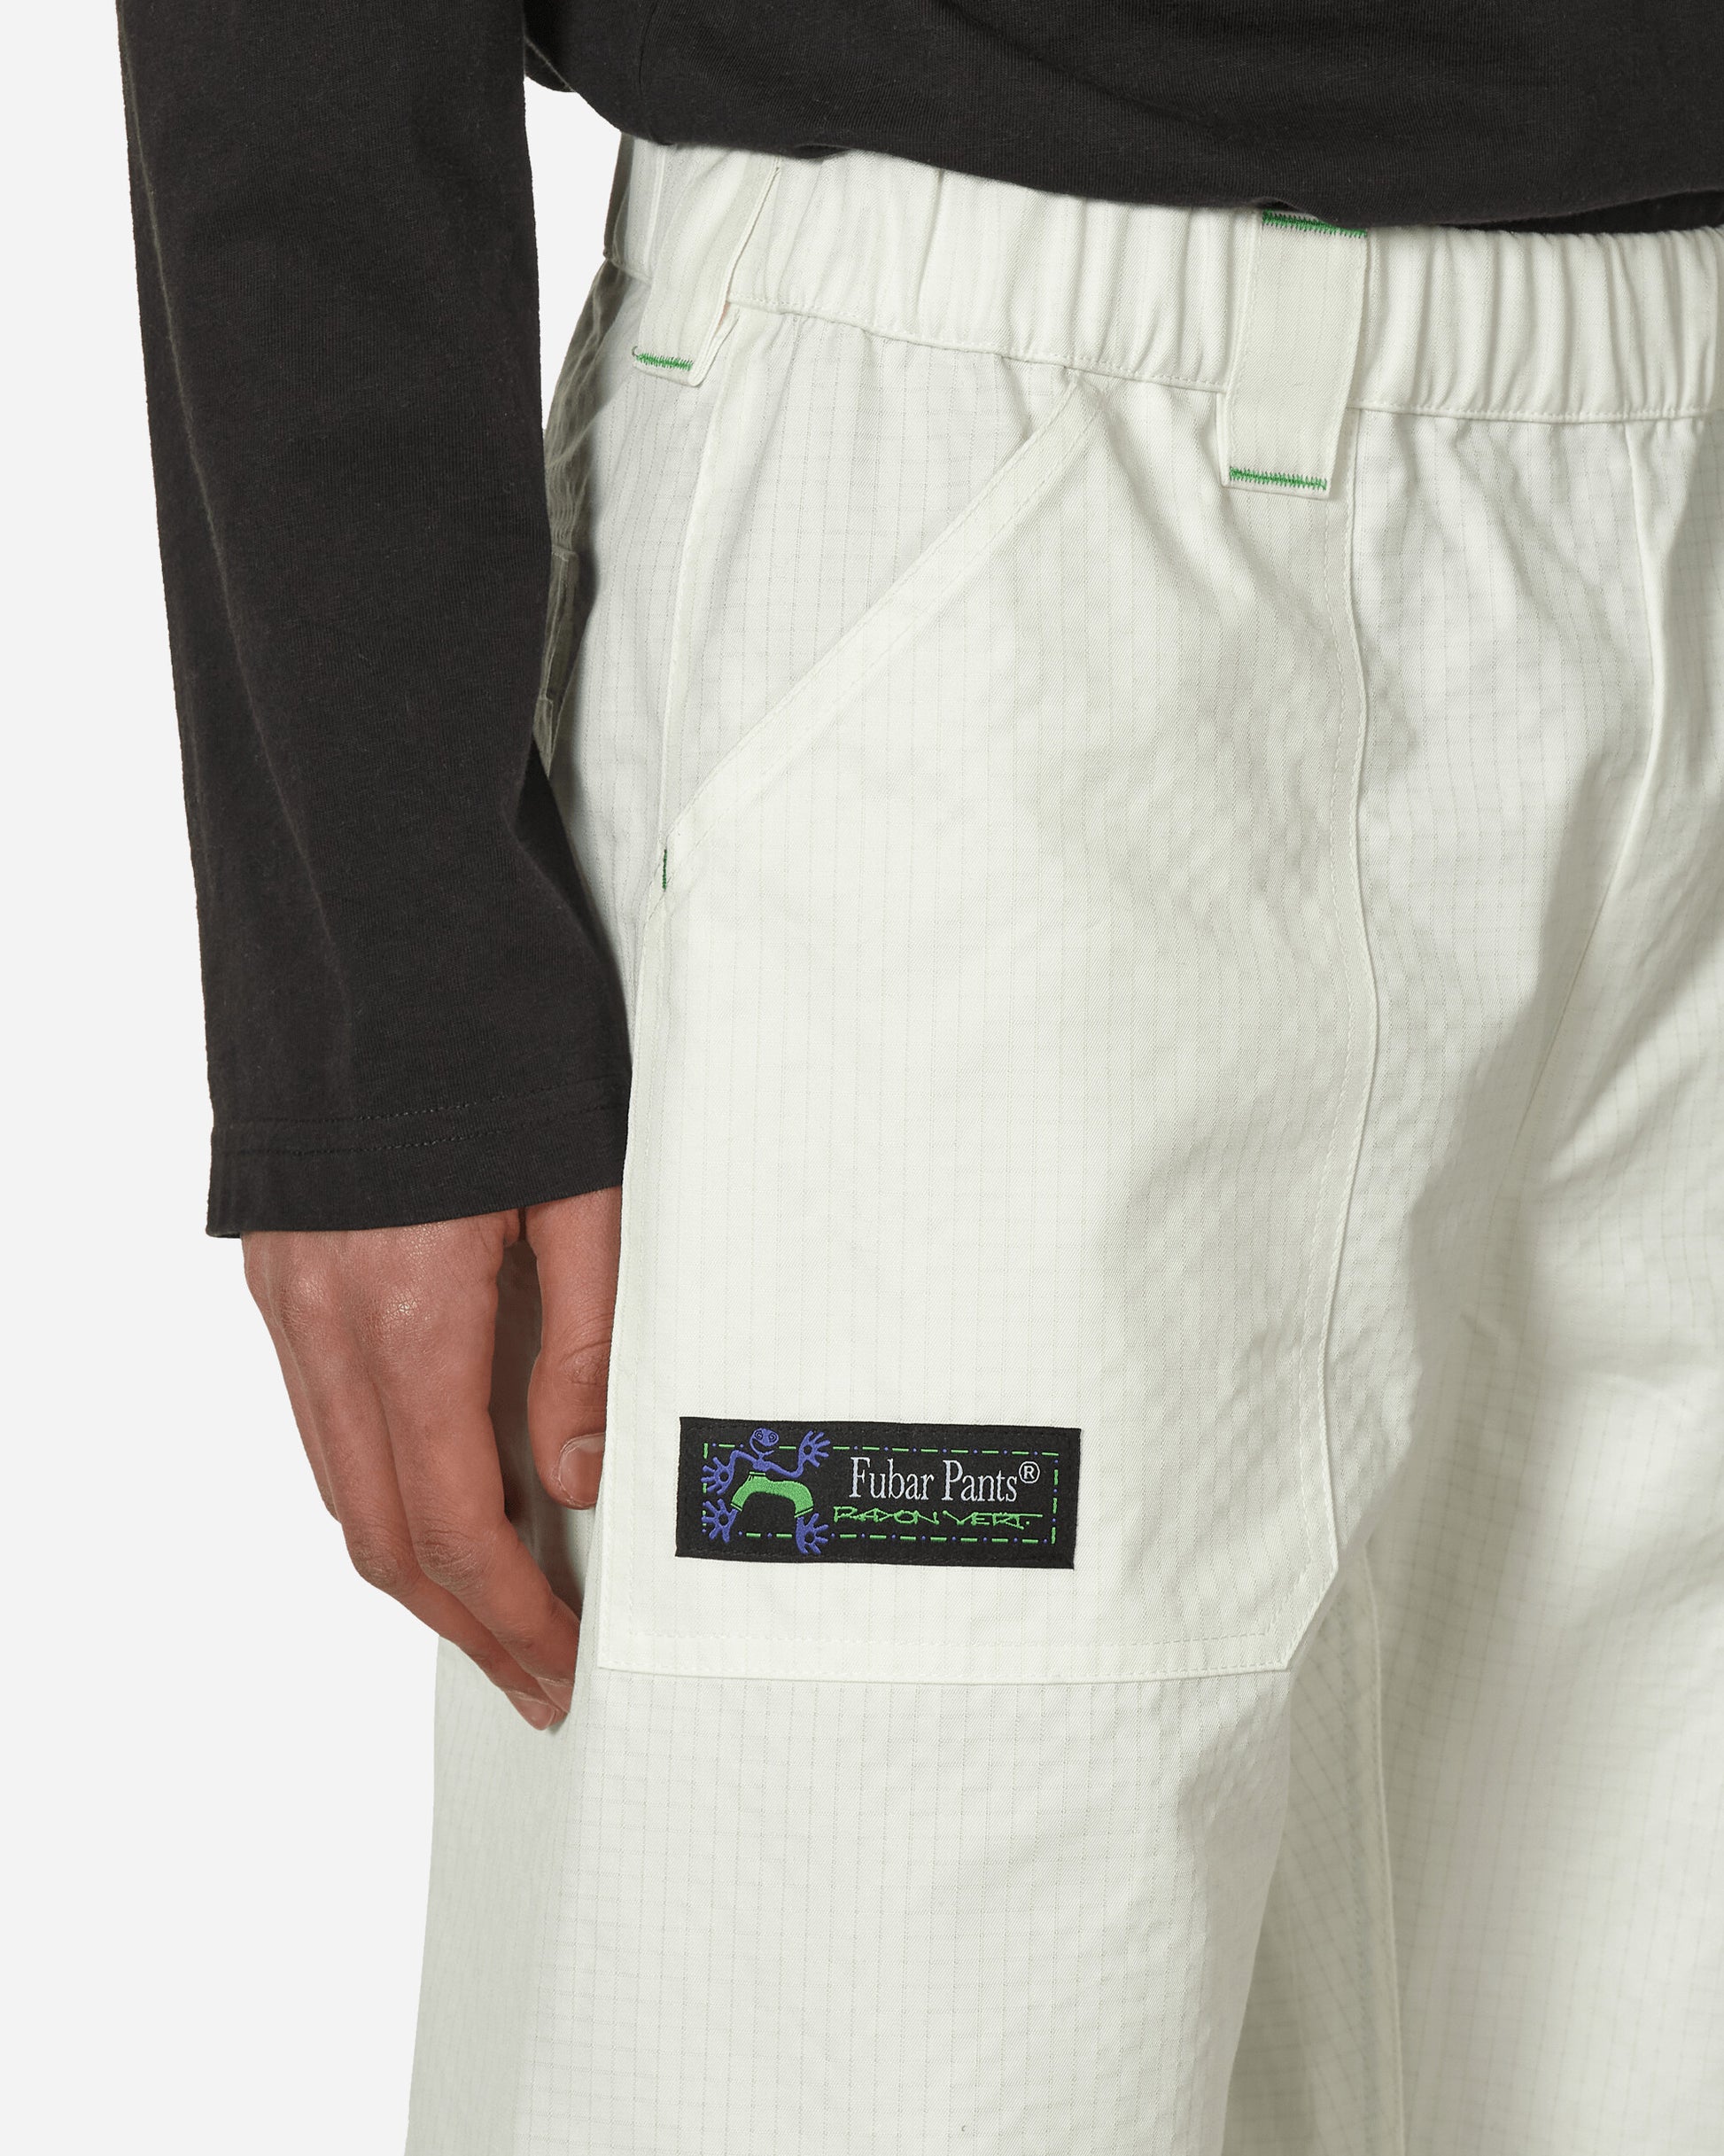 Rayon Vert Fubar Pants Ready To Dye Pants Track Pants RVS3-PT18 1